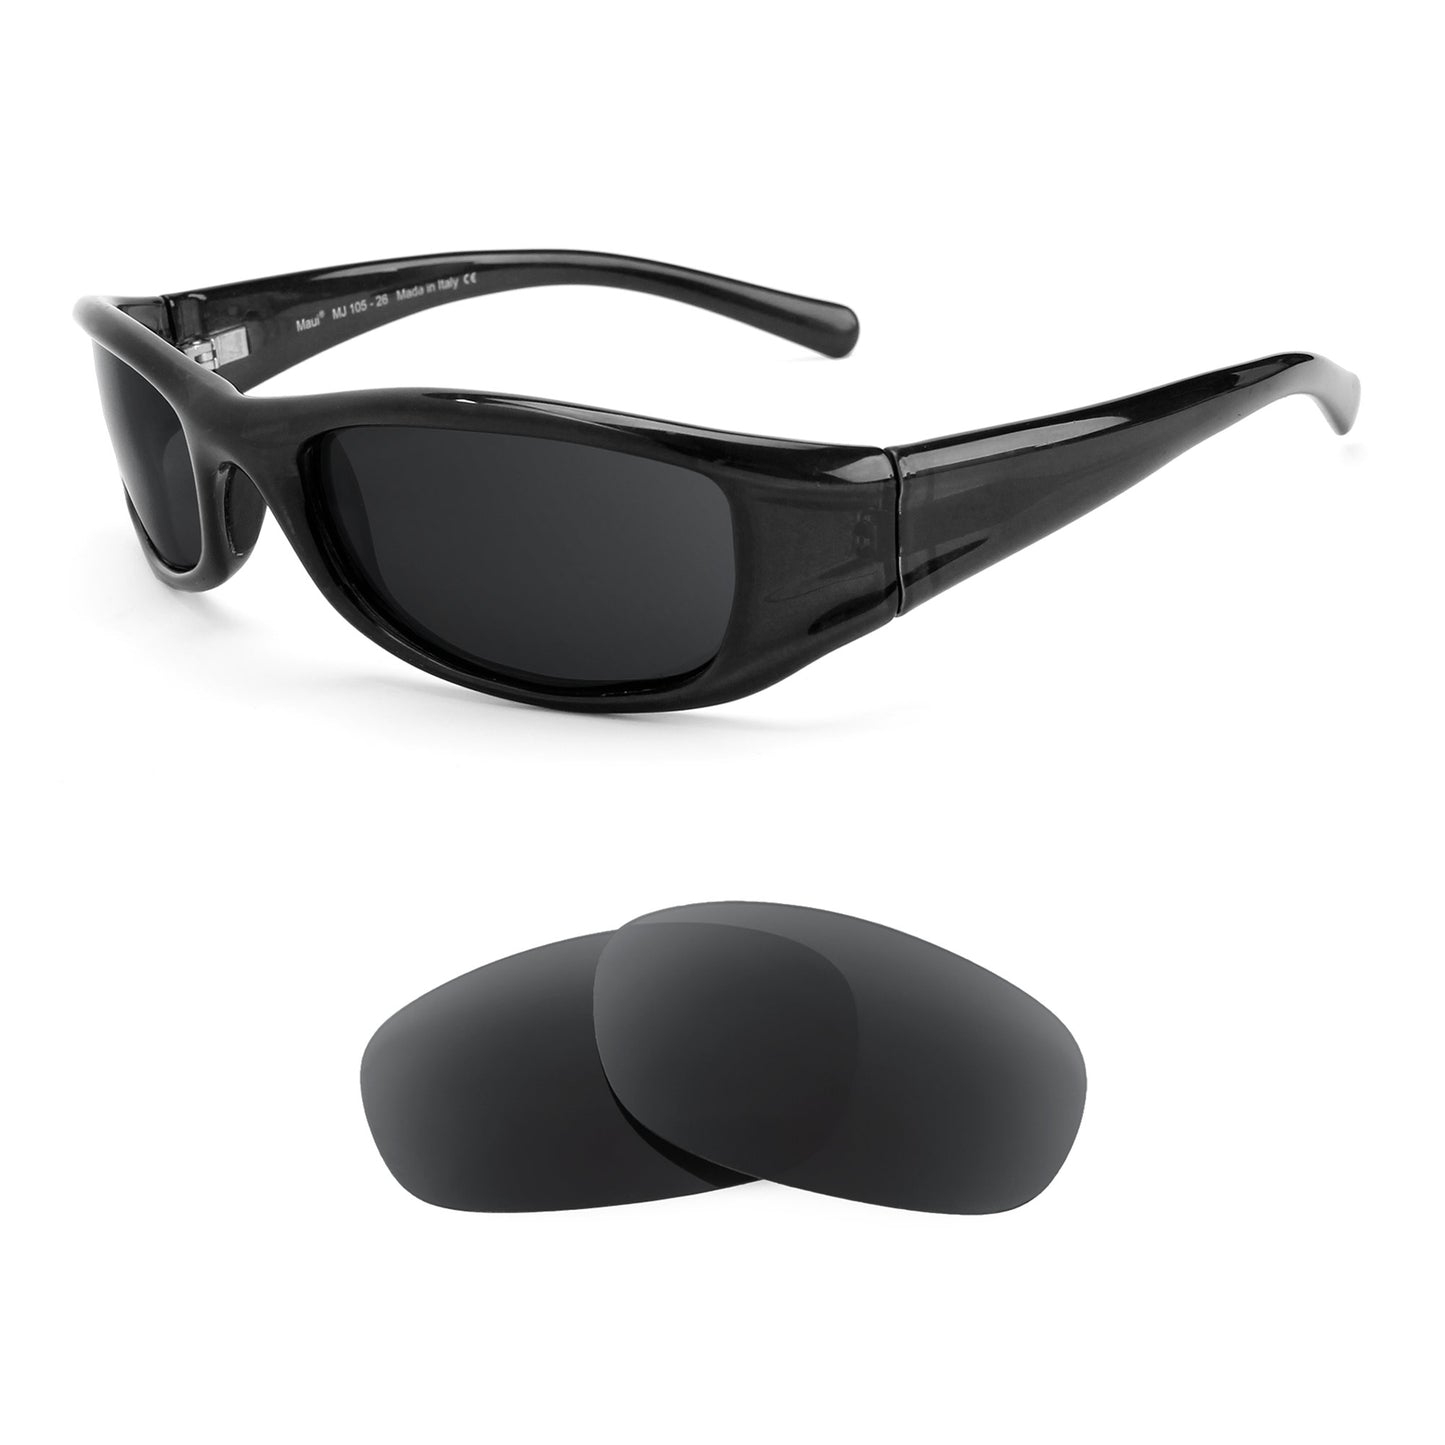 Maui Jim Shaka MJ105 sunglasses with replacement lenses